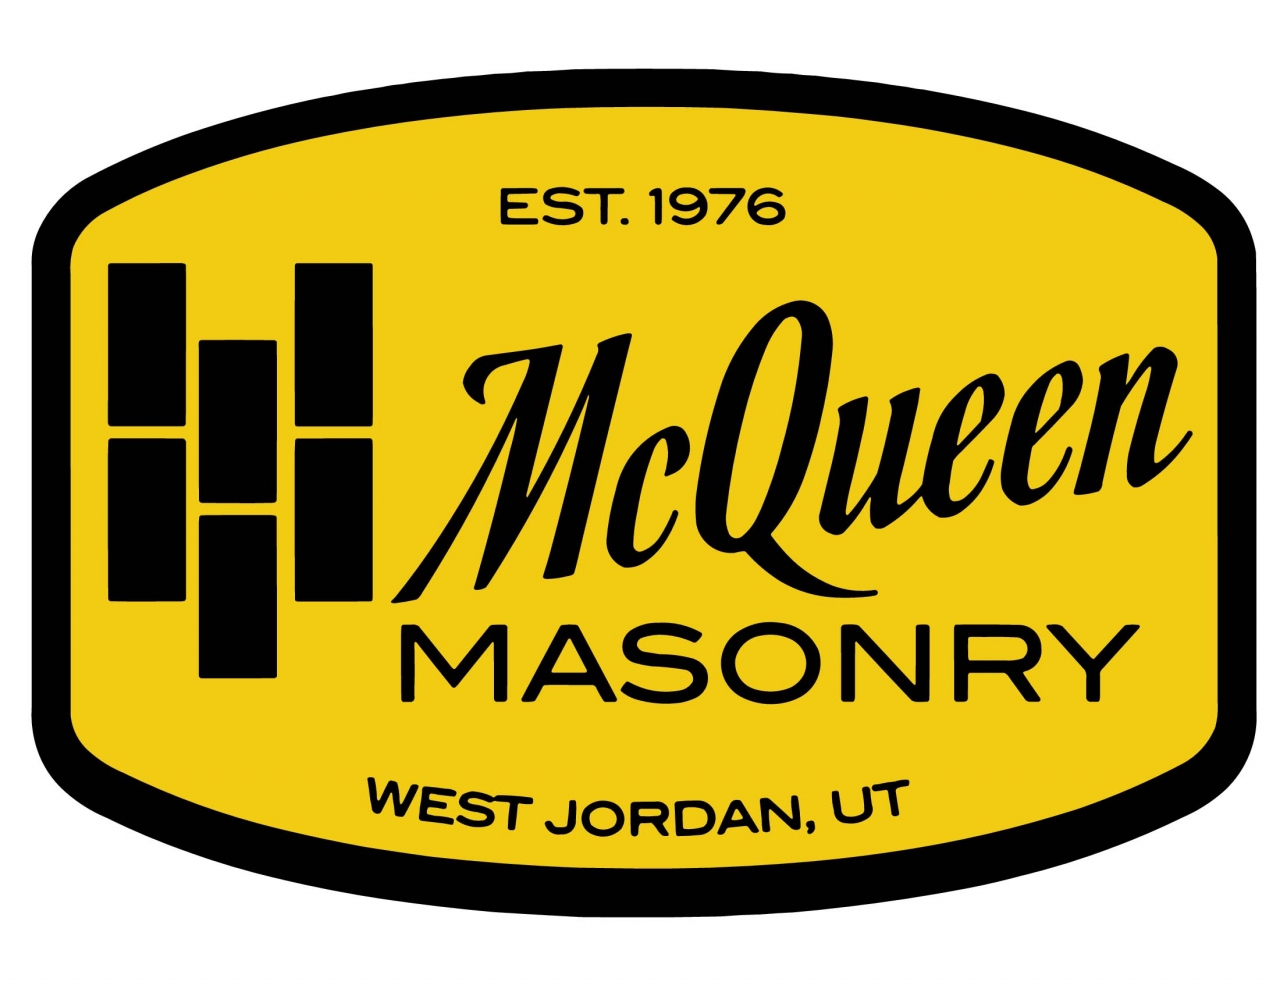 McQueen Masonry